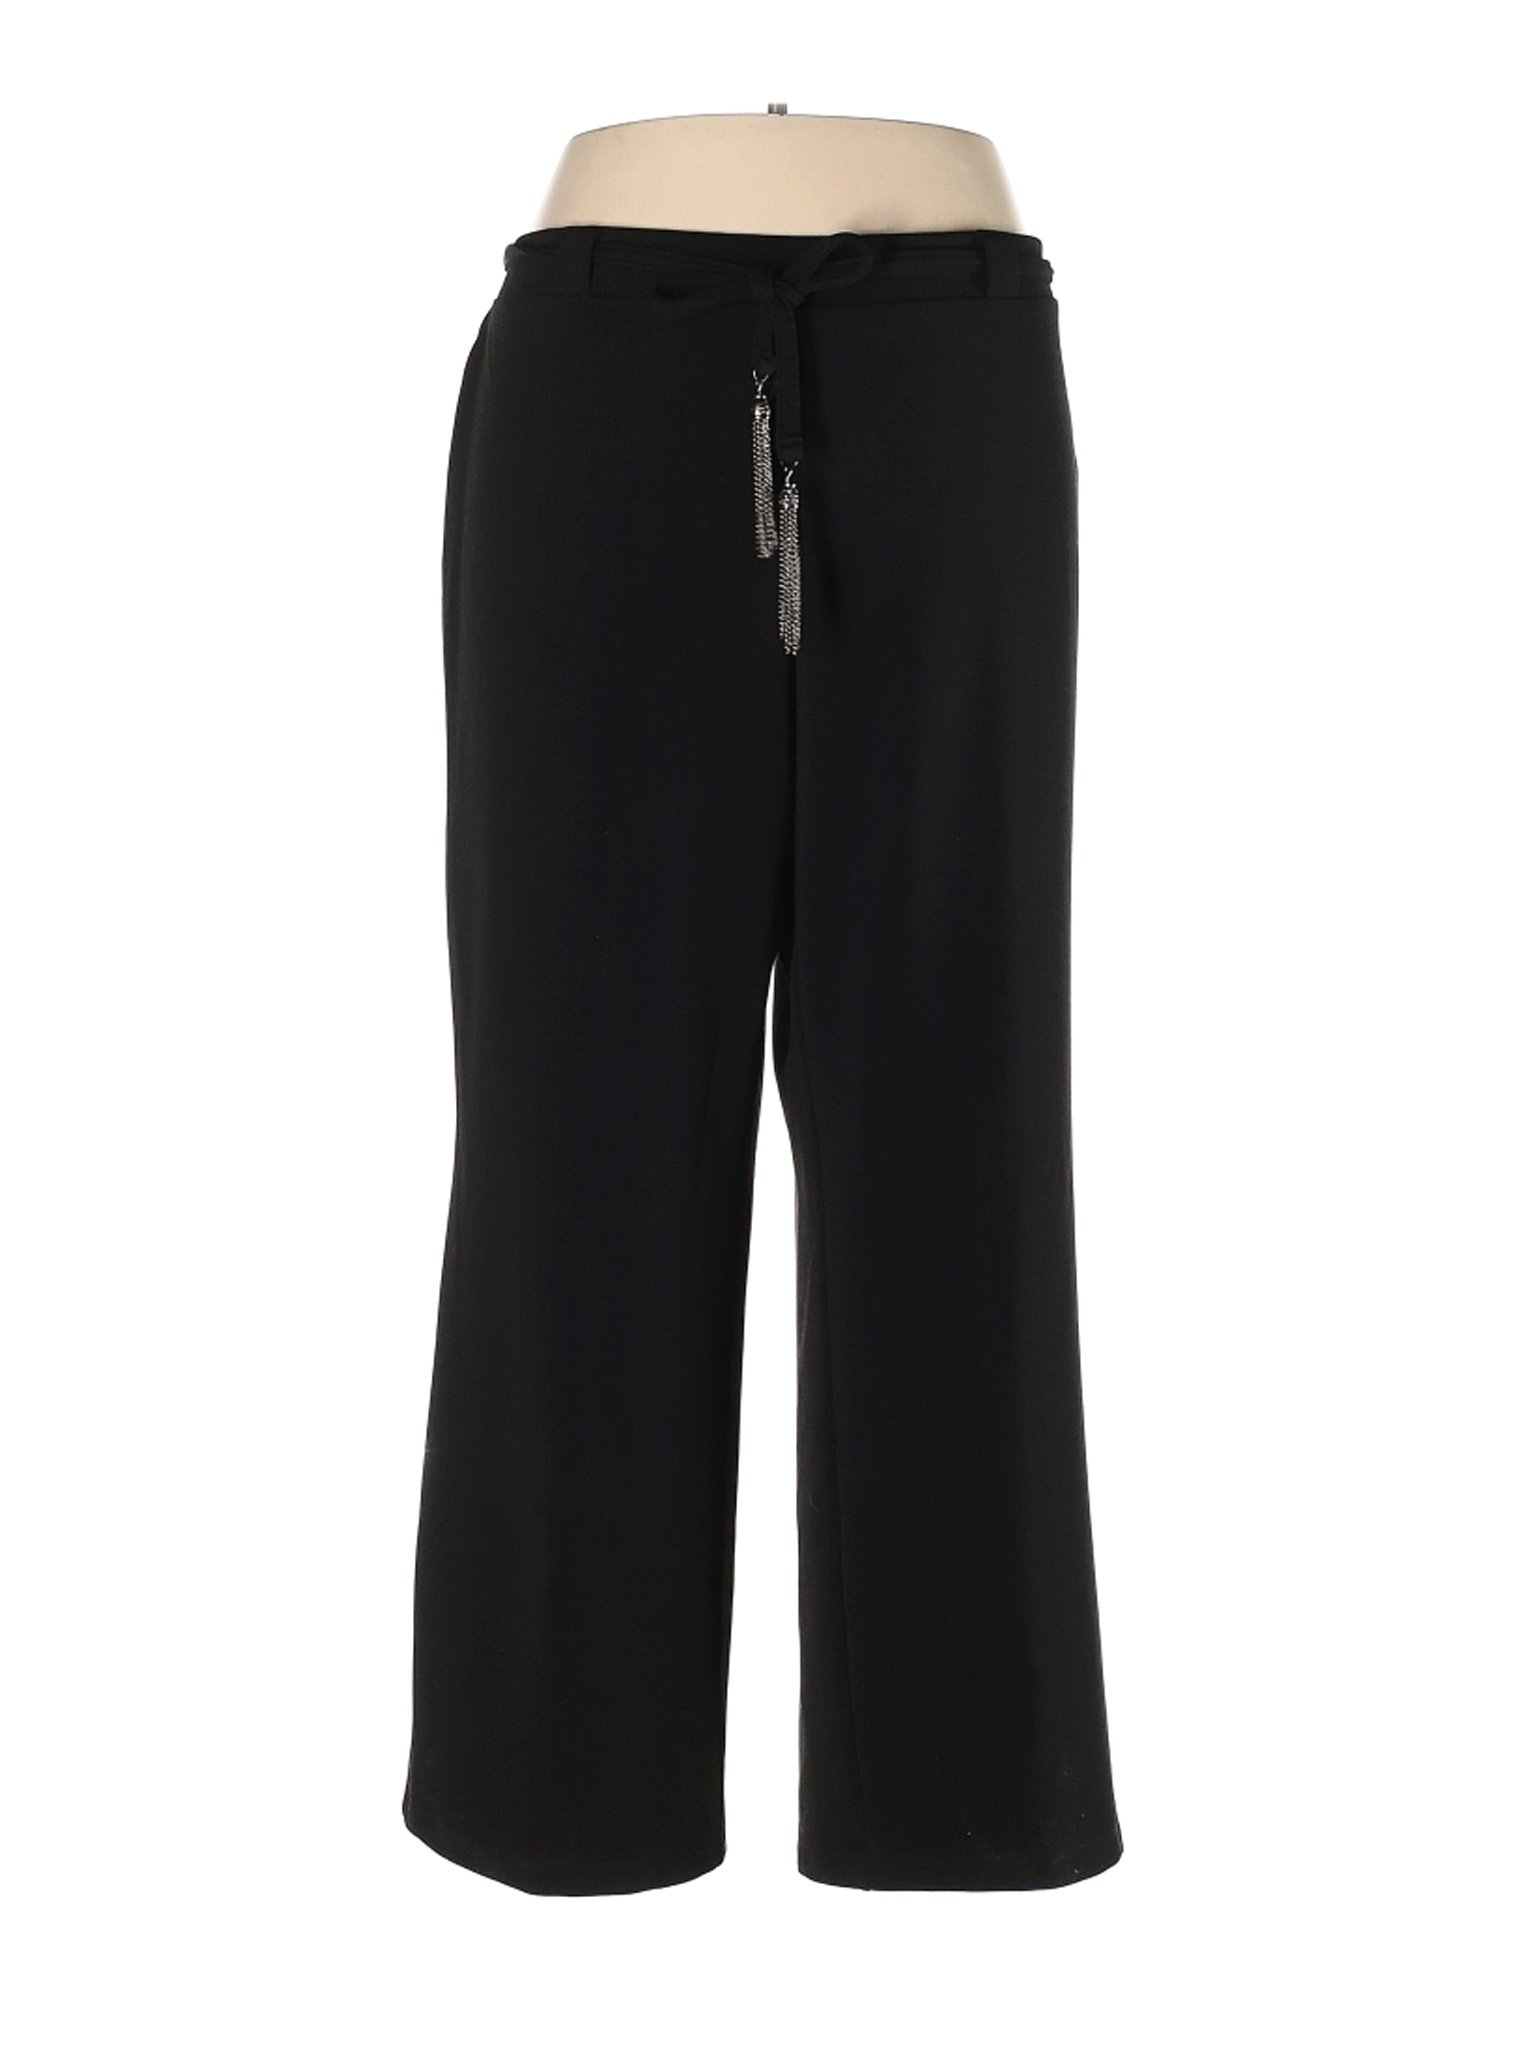 Cato Women Black Dress Pants 18 Plus | eBay